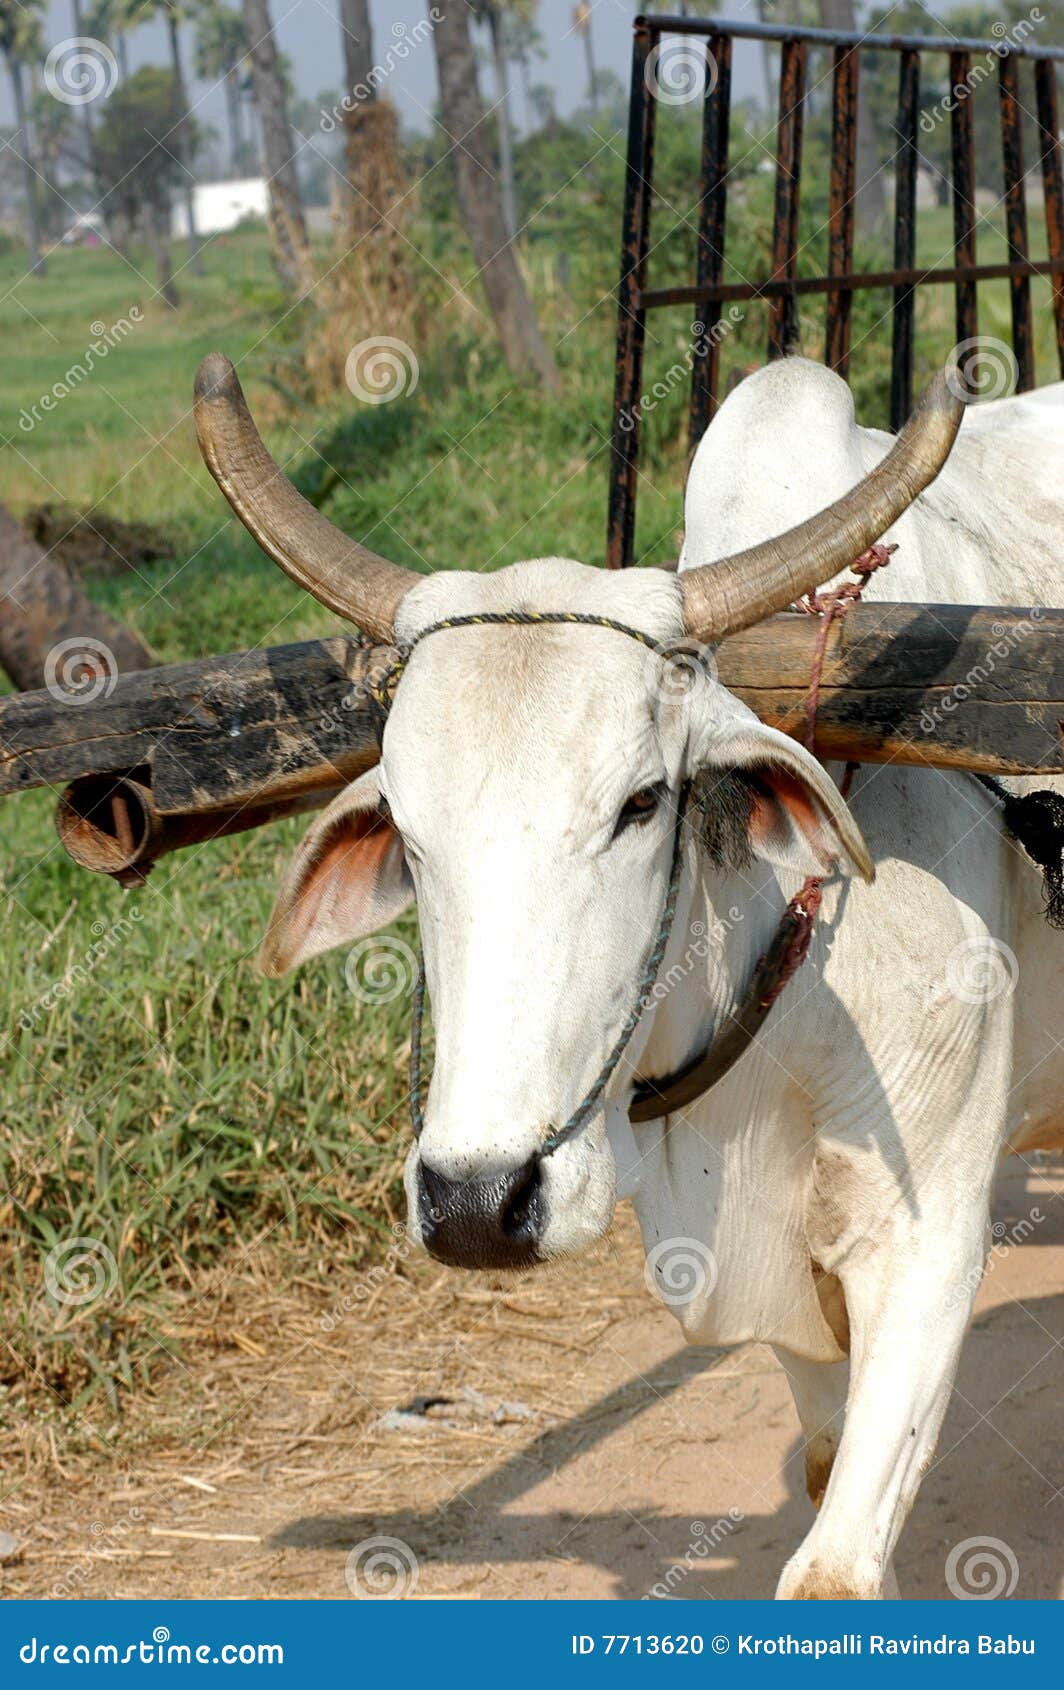 white ox pulling cart